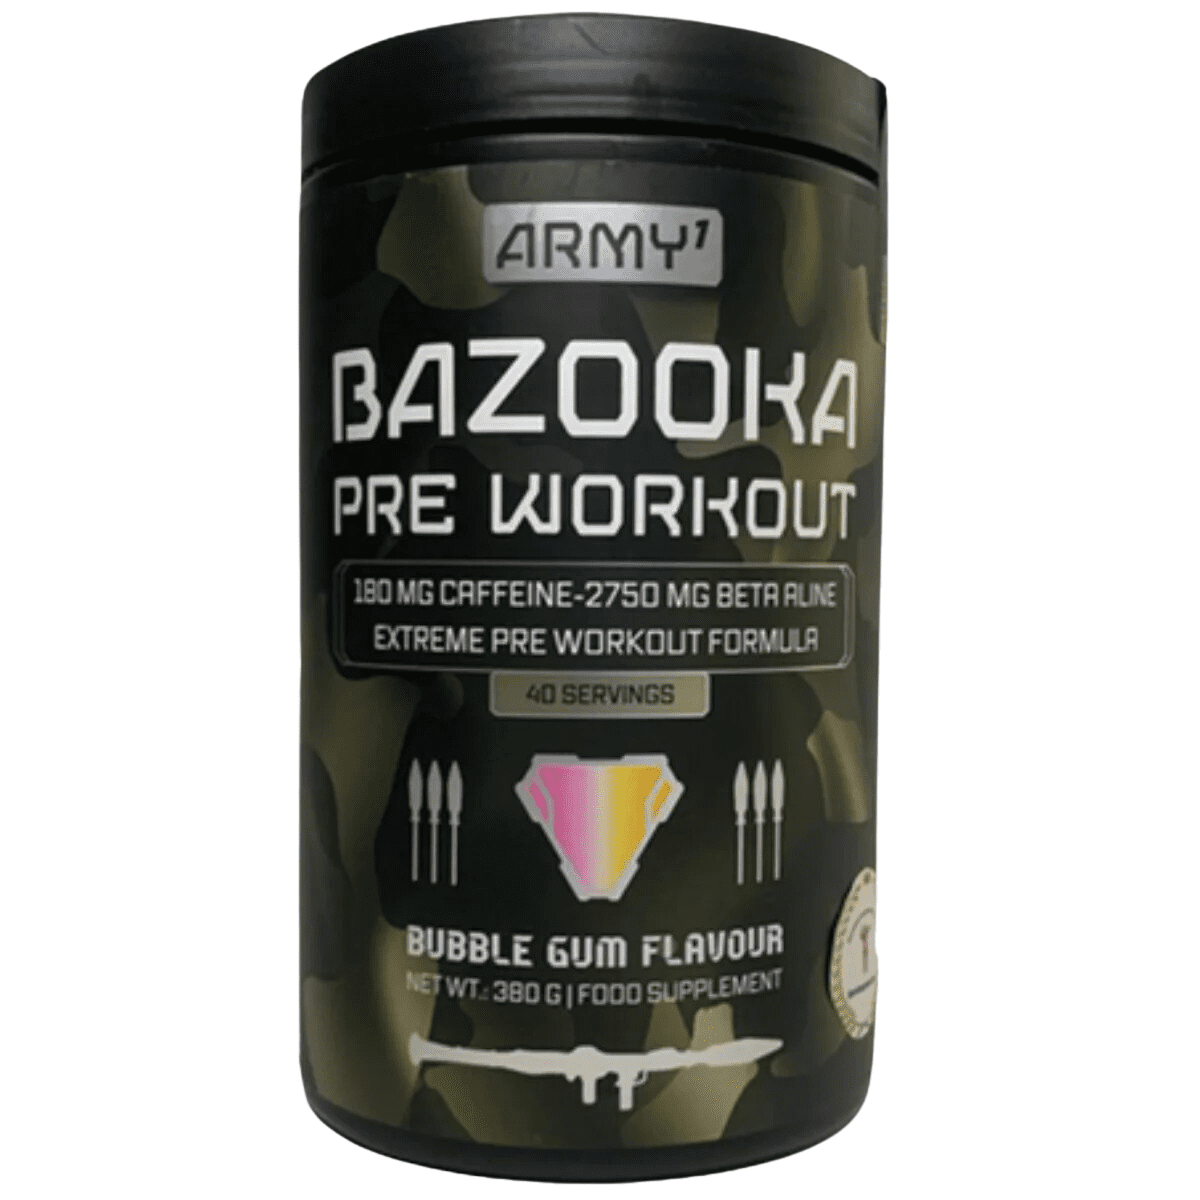 Army1 Bazooka Pre-Workout - 2